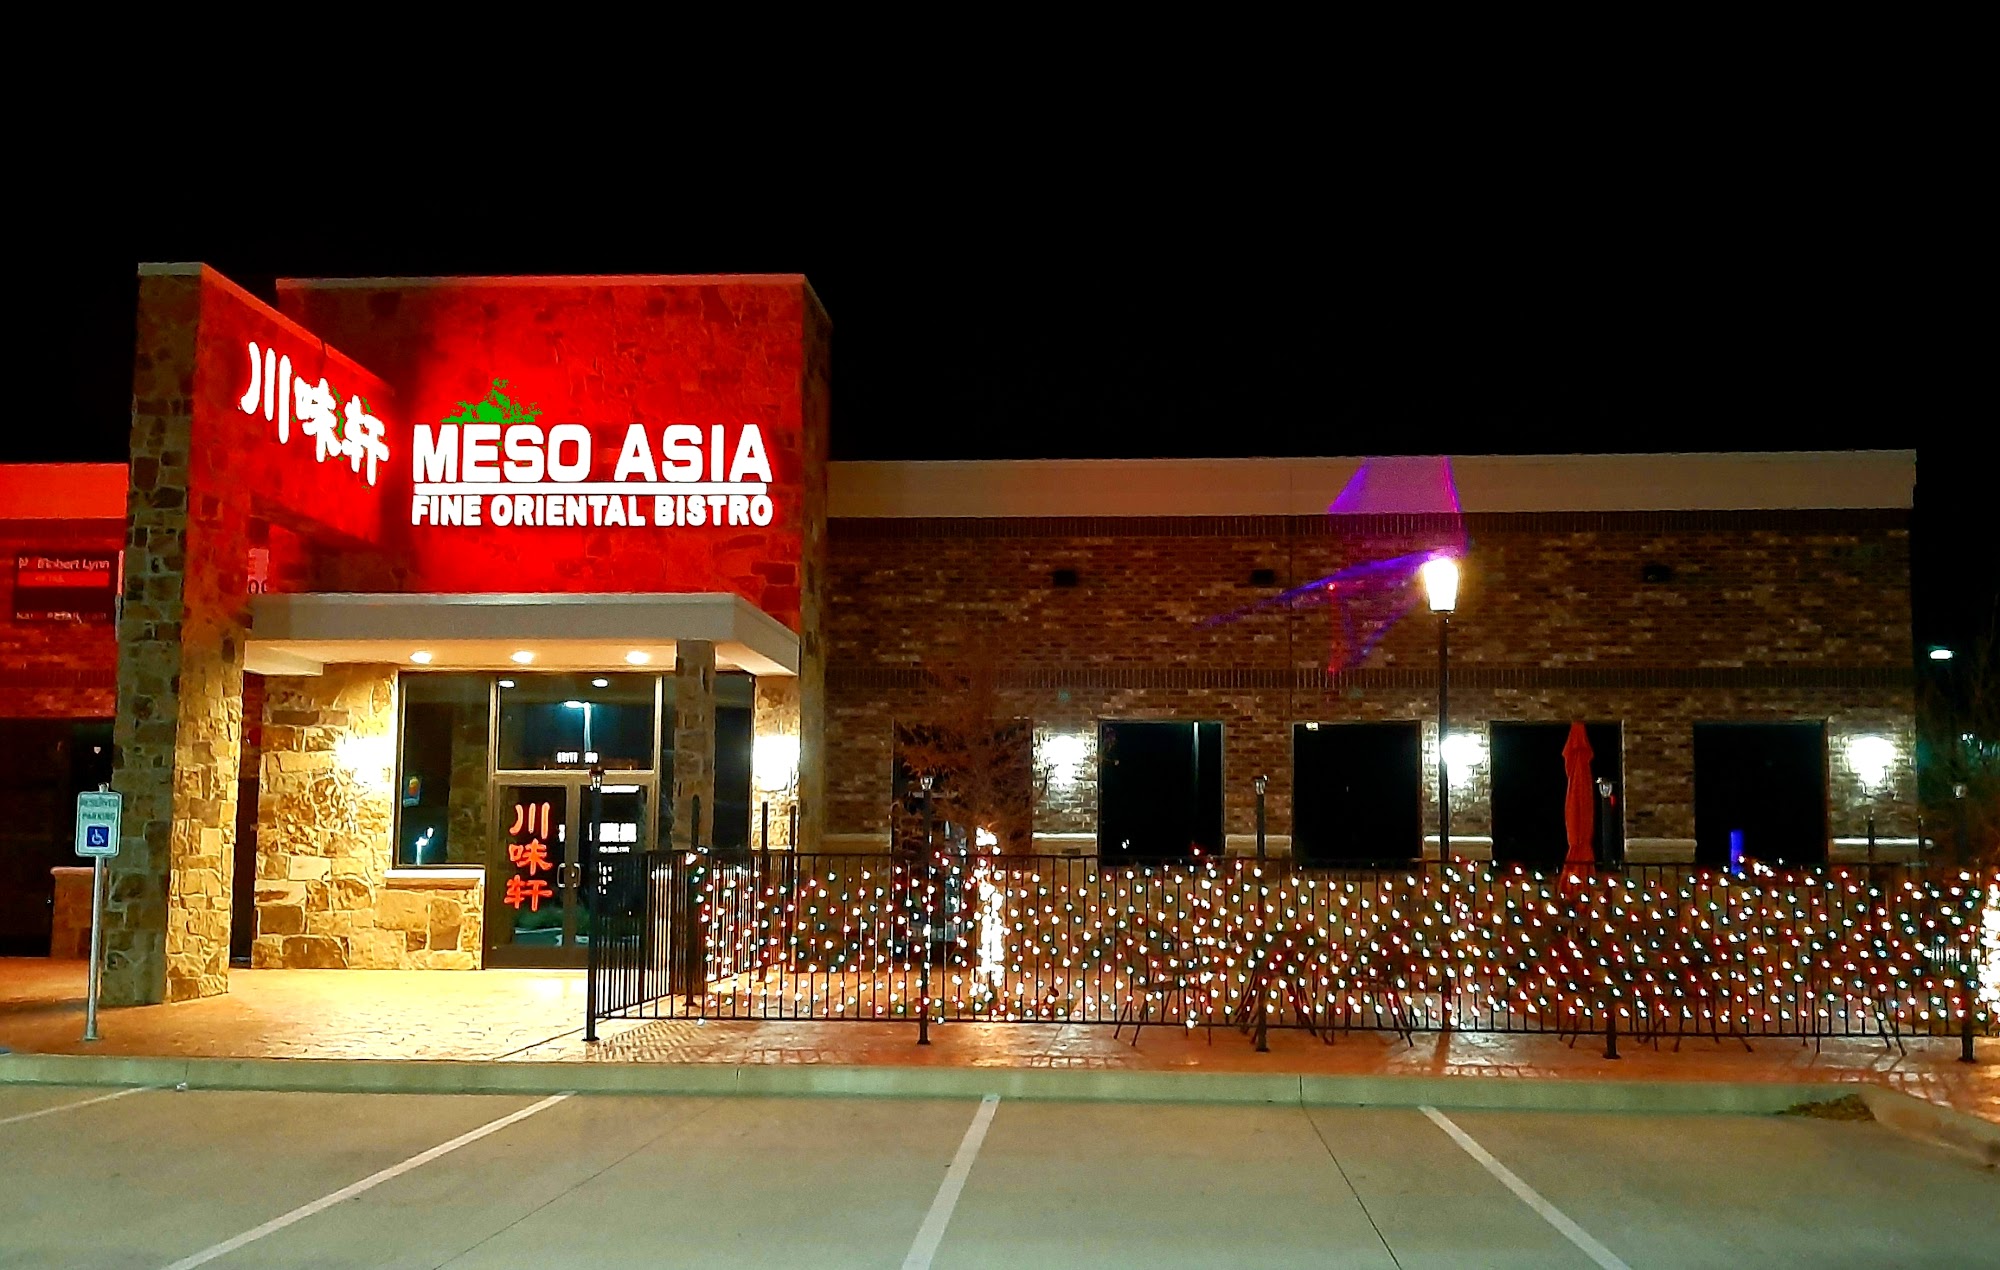 Meso Asia - Asian Fusion Cuisine